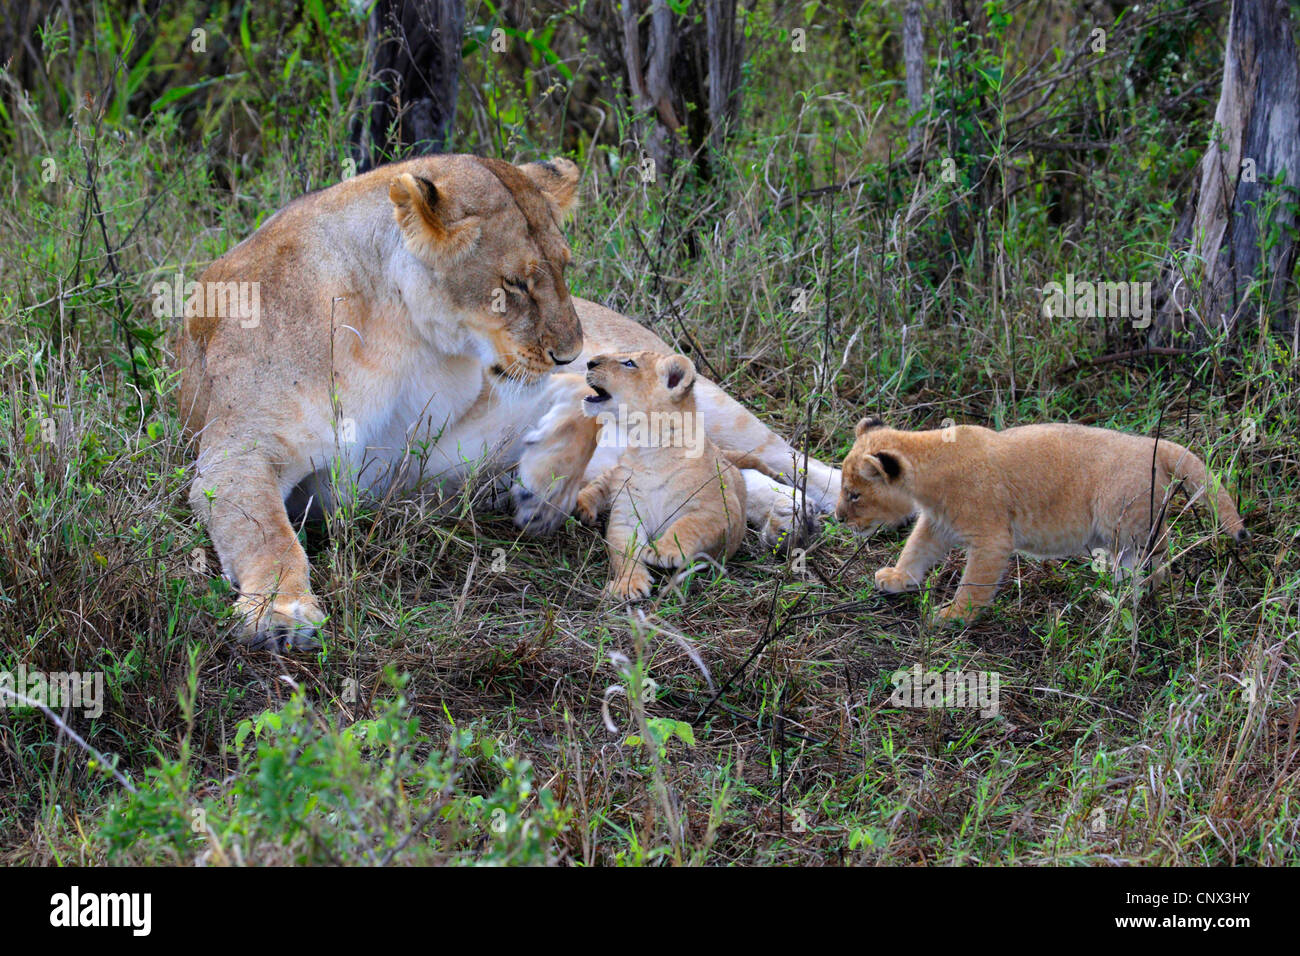 Lion (Panthera leo), leonessa giacente in erba con due gattini, Kenia Masai Mara National Park Foto Stock